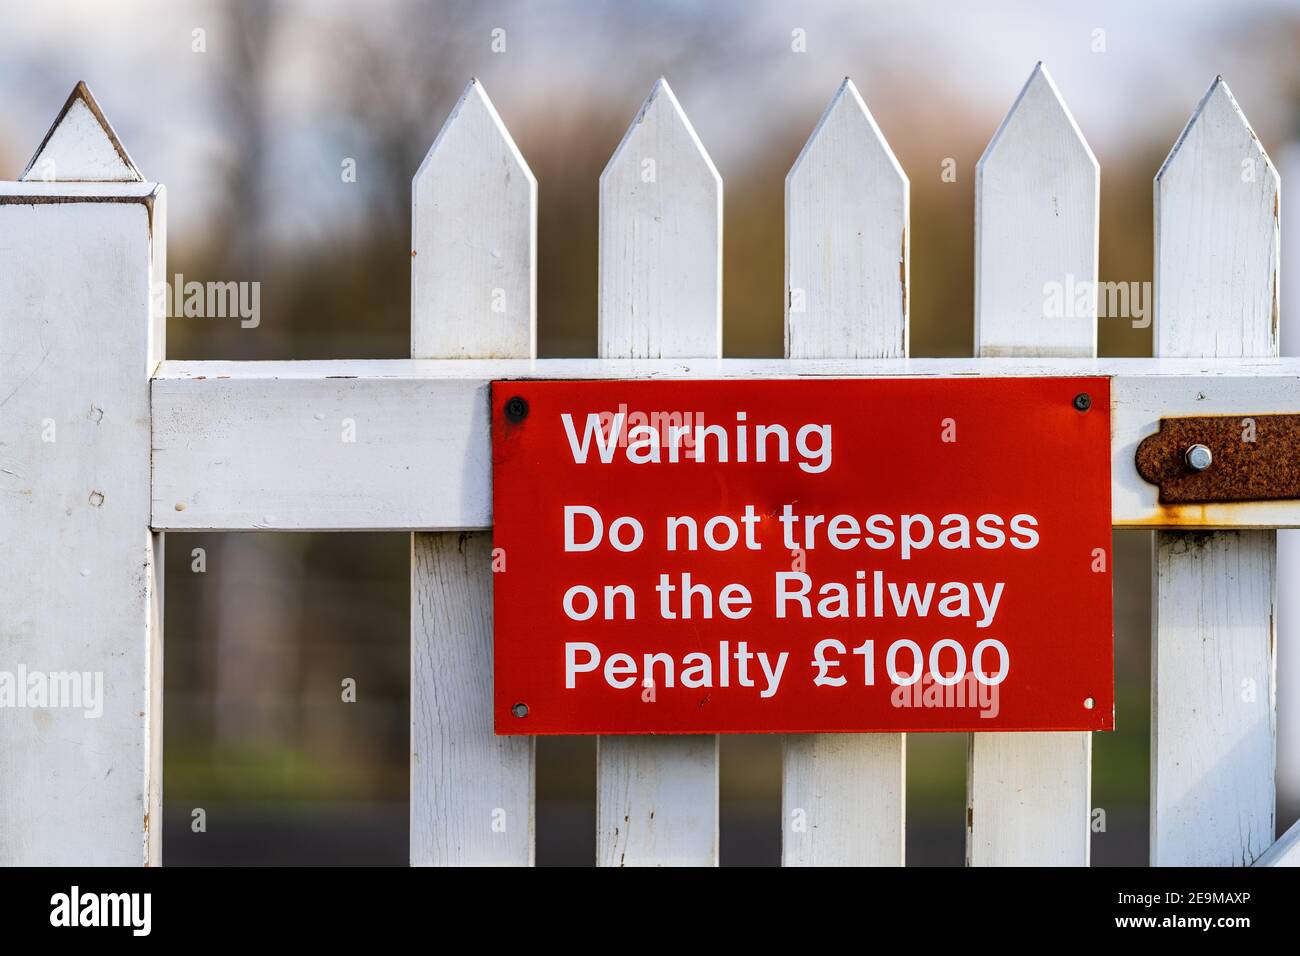 Warning Do not trespass on the Railway Penalty £1000 sign. Railway trespass warning sign UK. Stock Photo